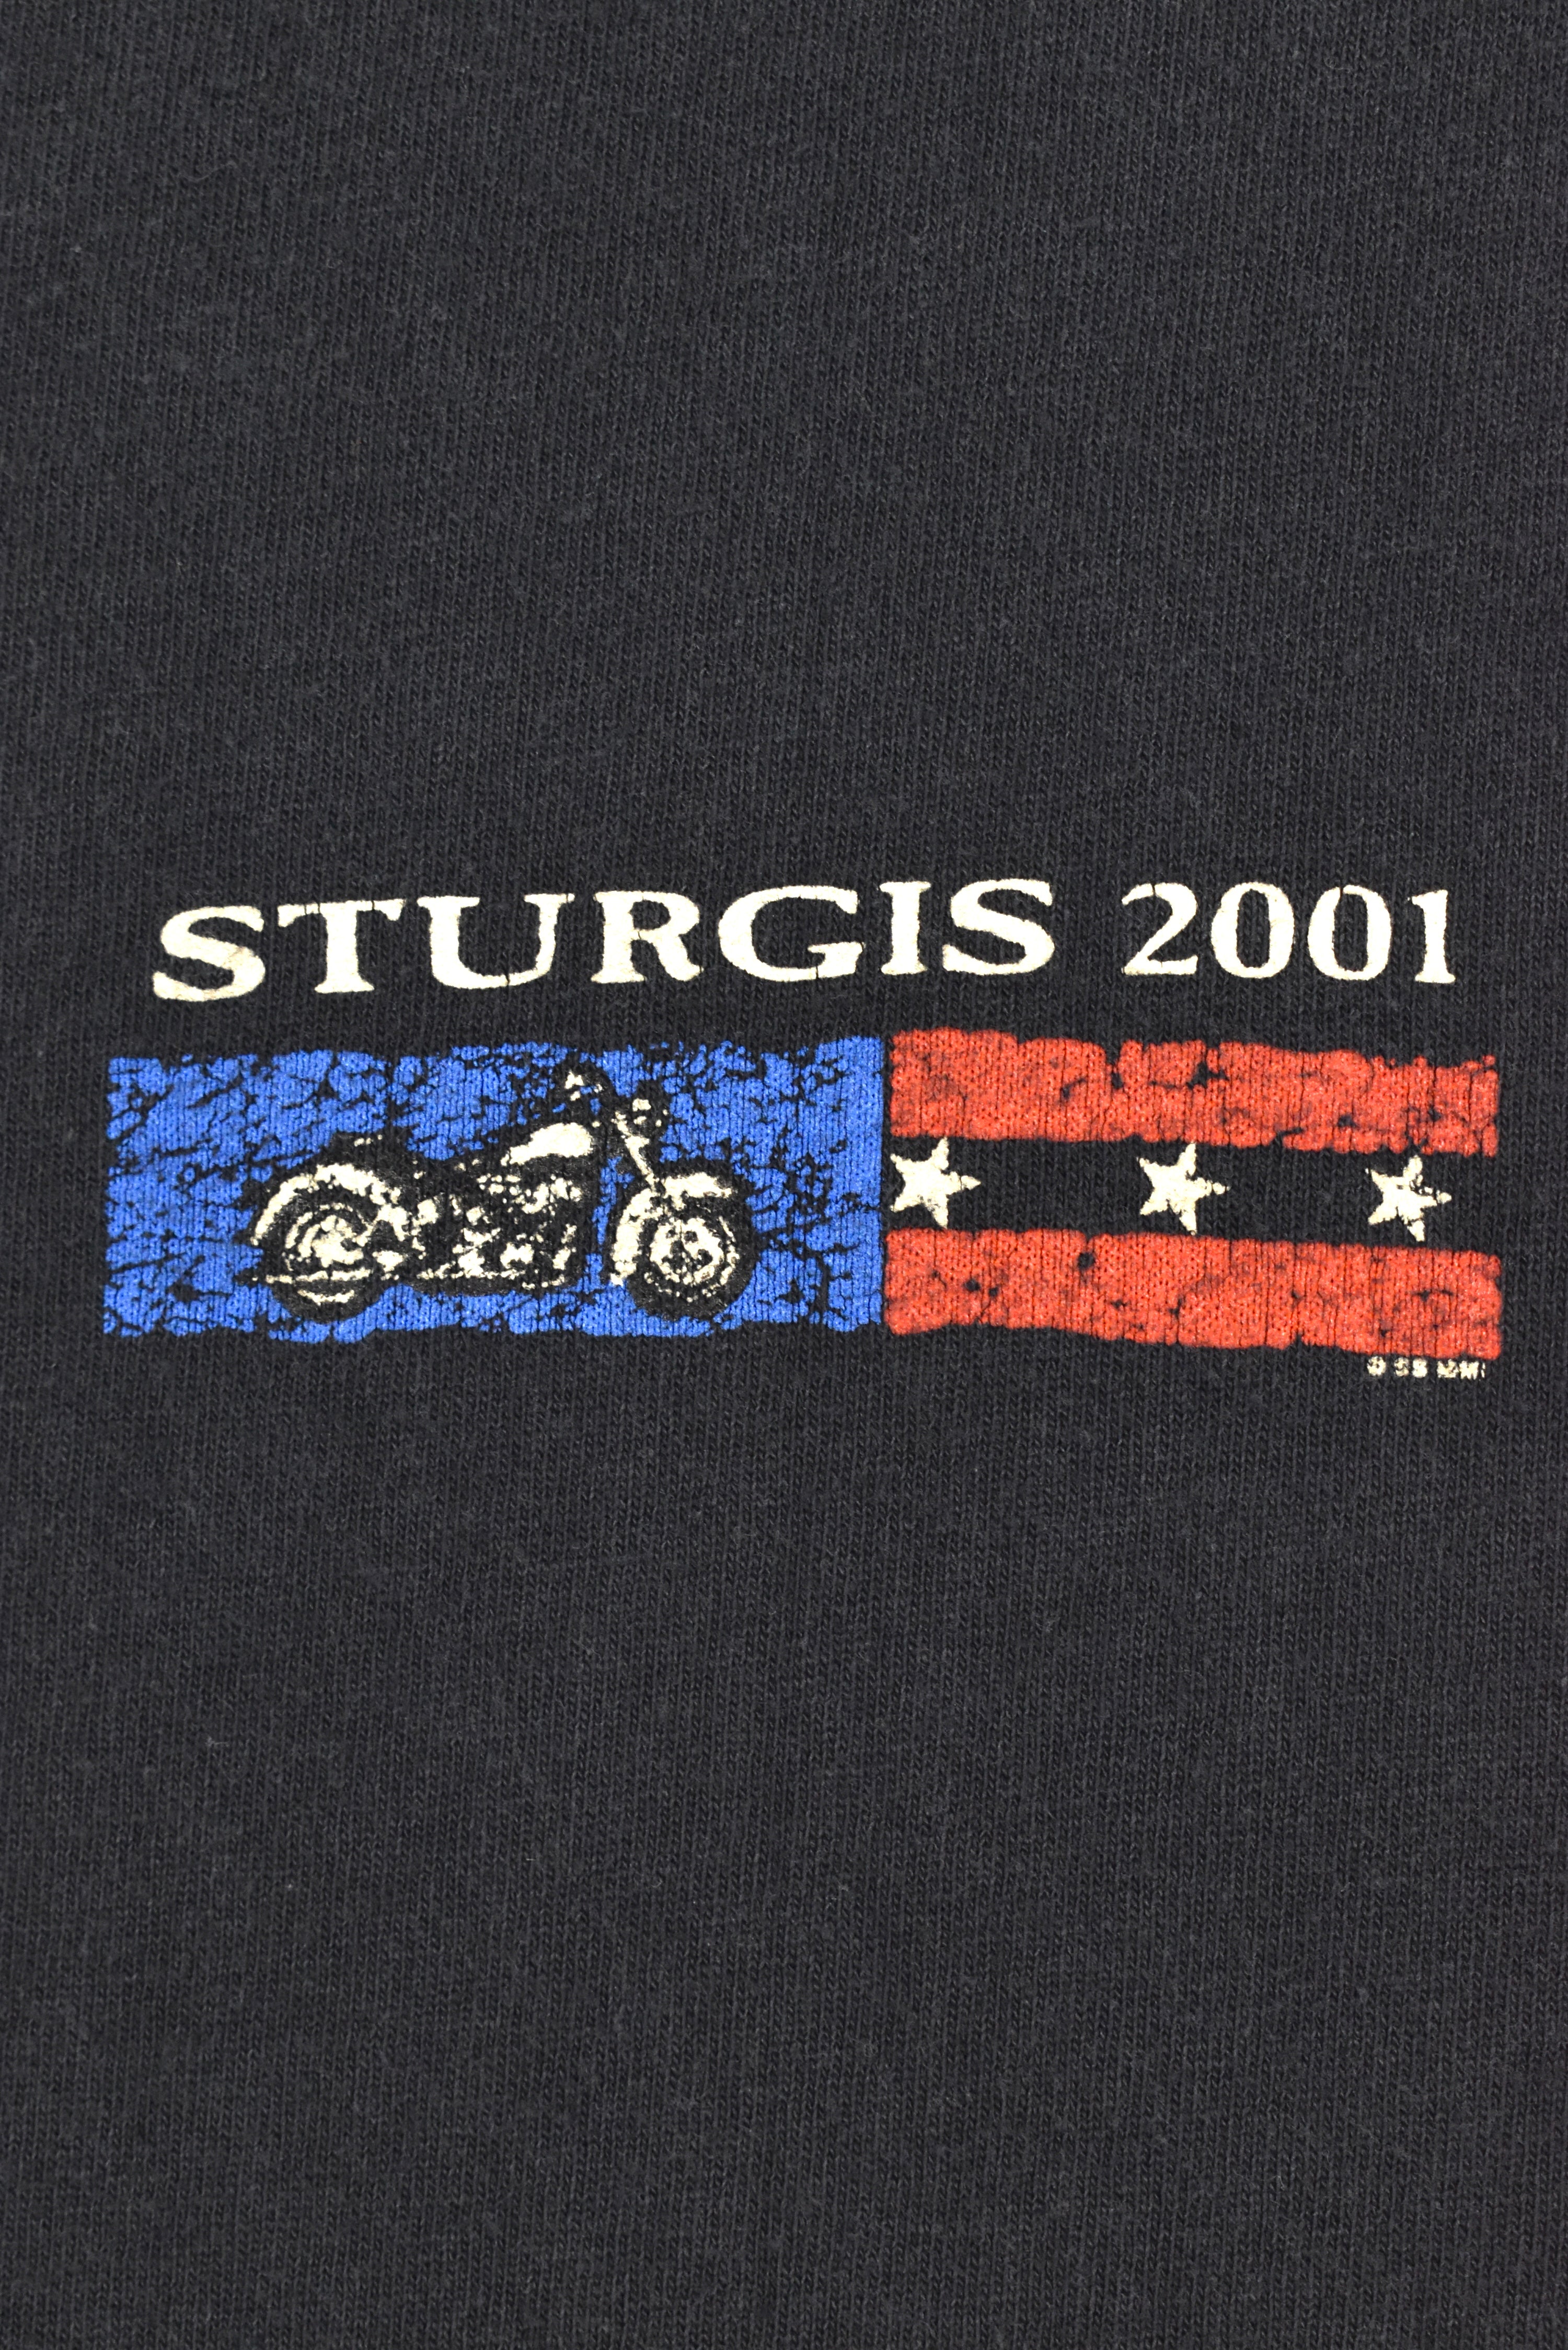 Vintage Sturgis shirt, 2001 motorcycle biker graphic tee - large, black HARLEY DAVIDSON